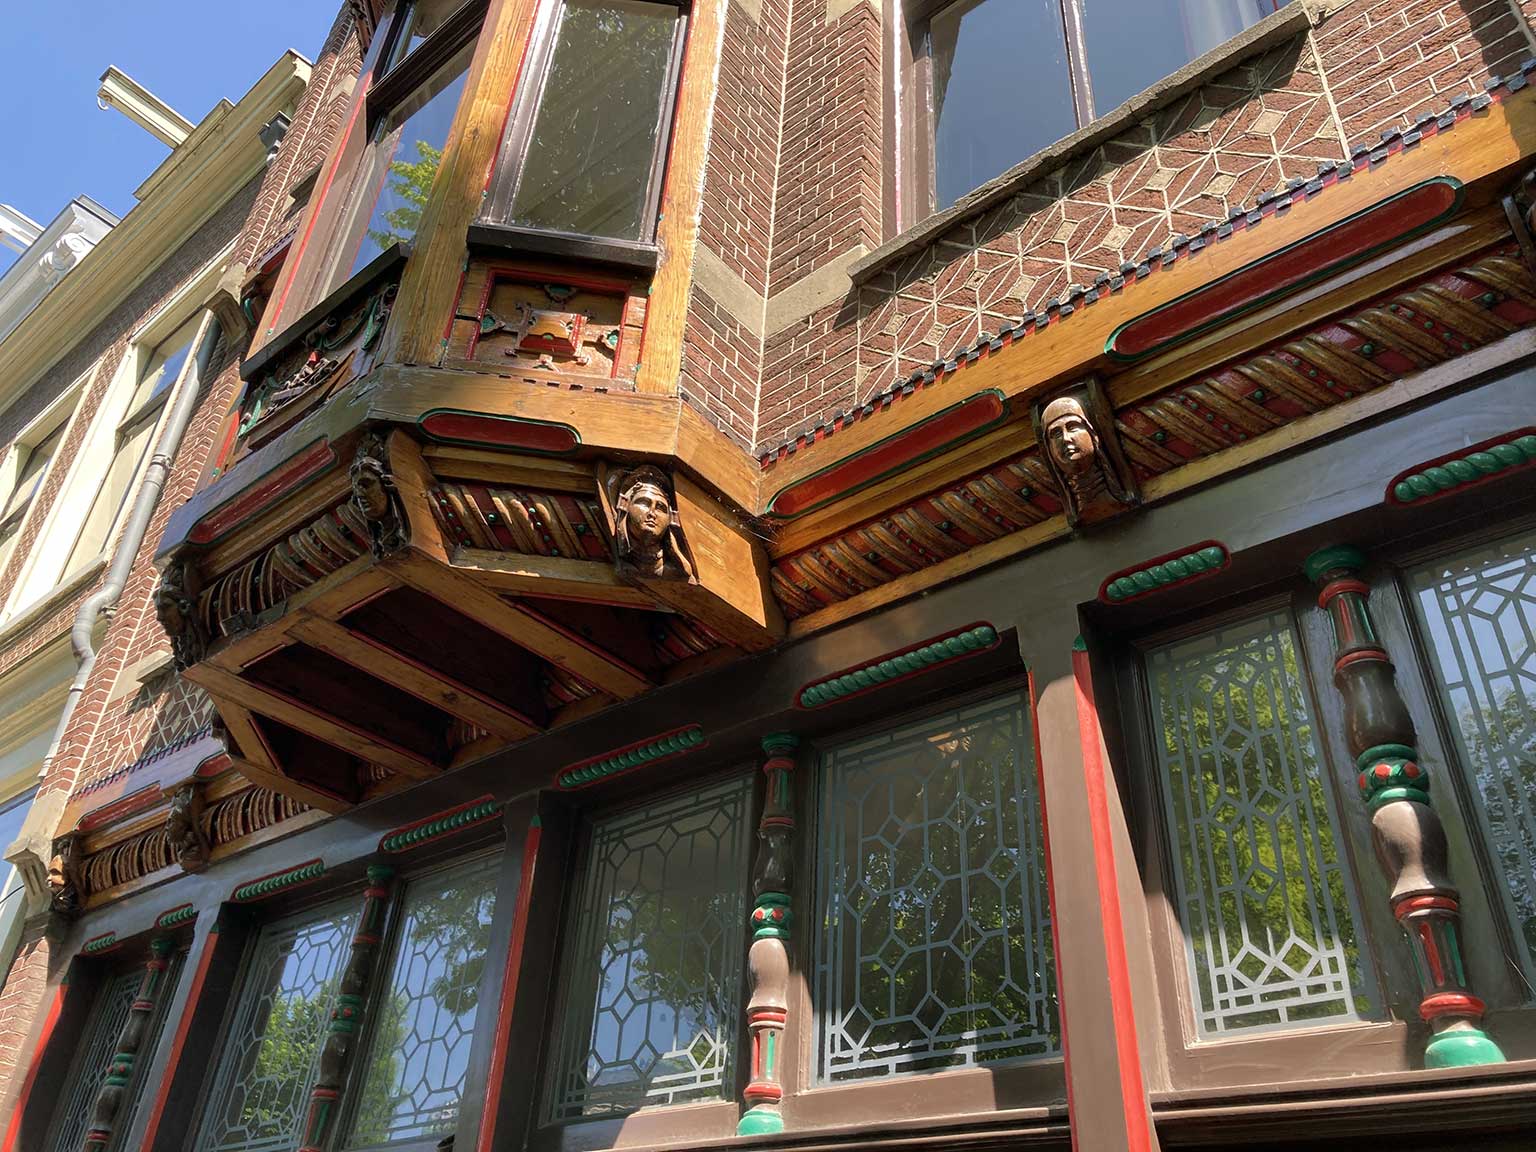 Detail of the wood and brickwork façade of Reguliersgracht 57-59, Amsterdam